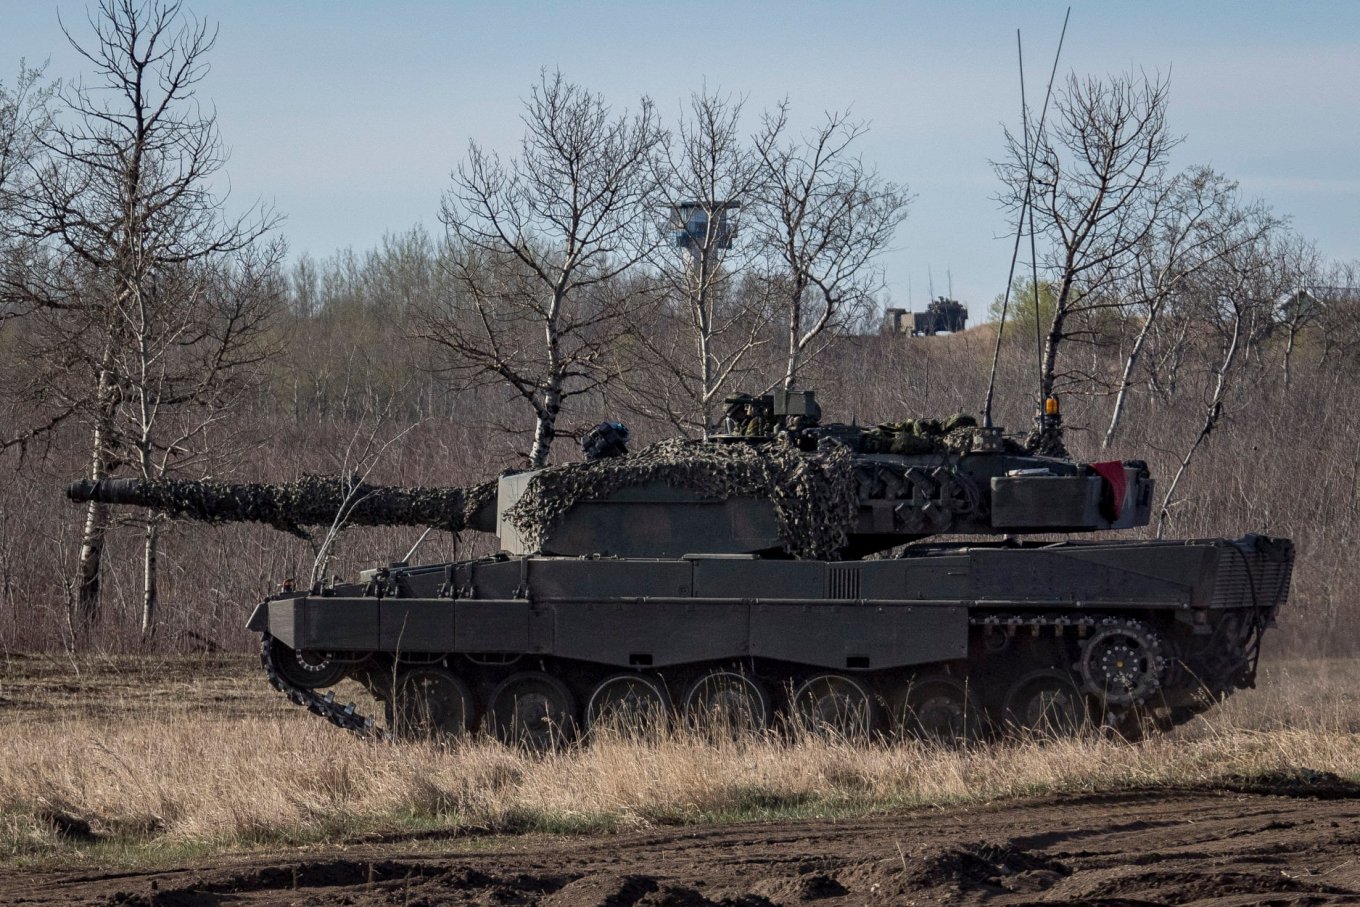 Leopard 2A4M